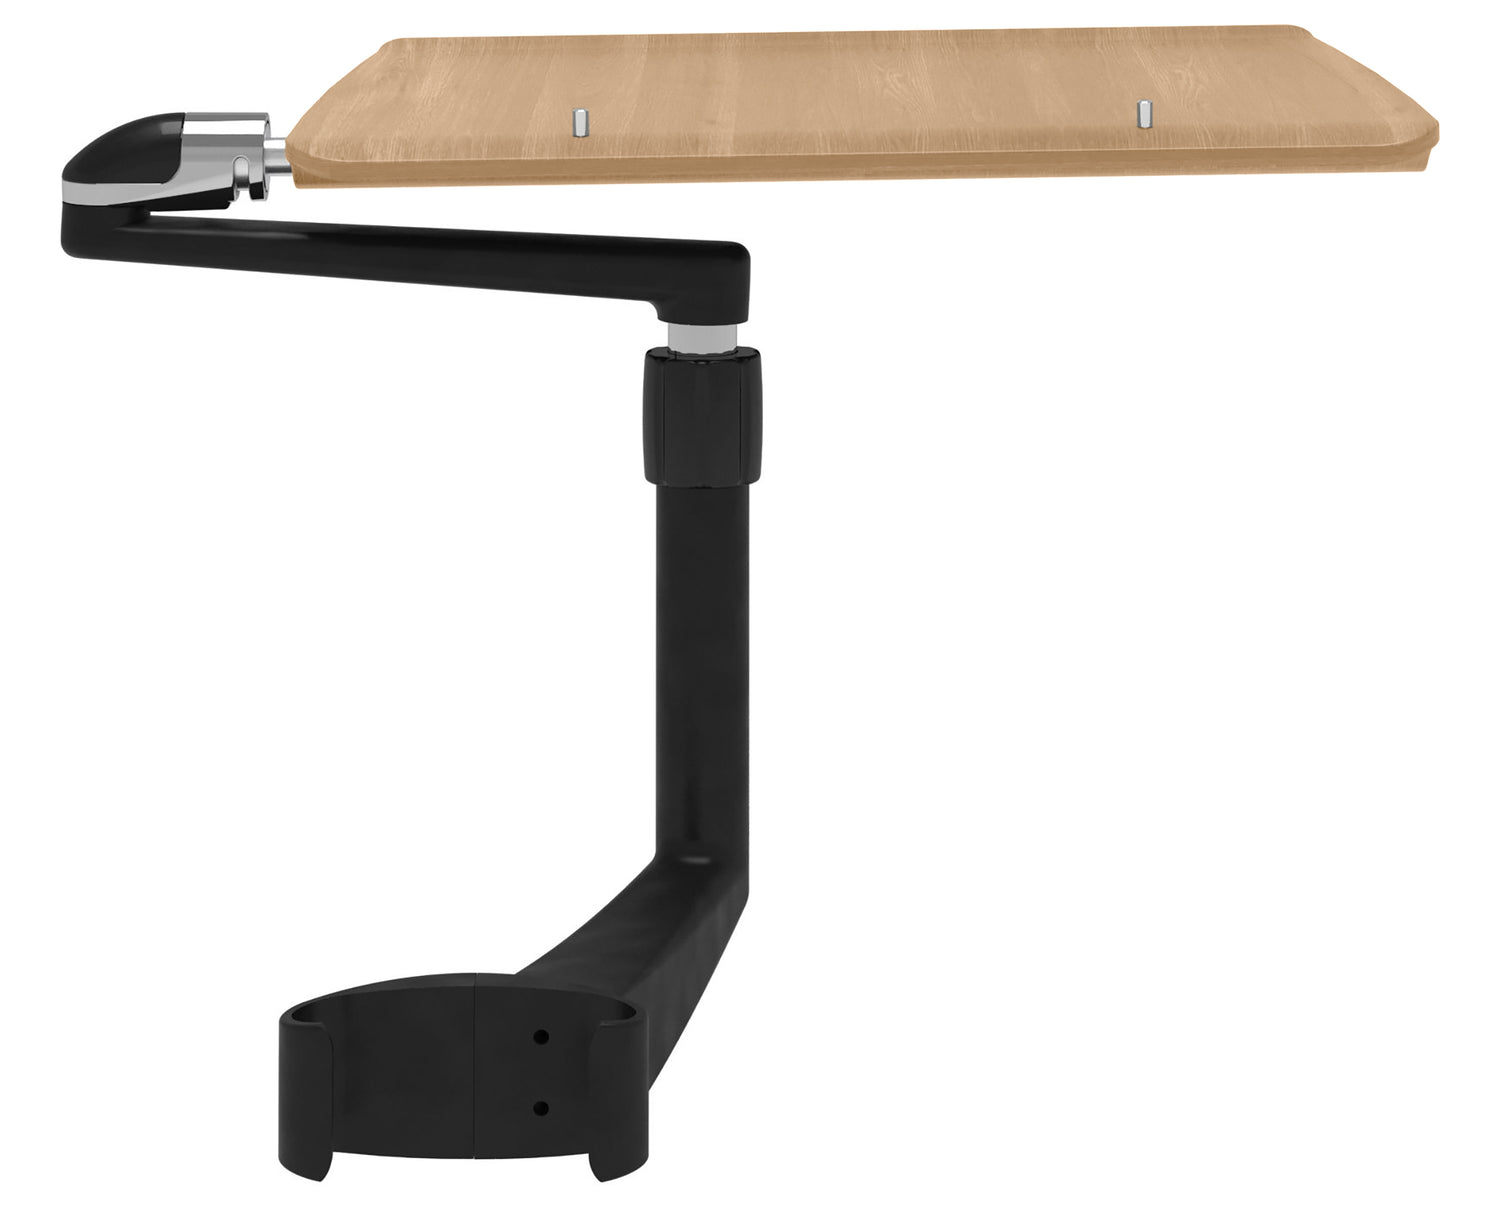 Oak Top | Stressless Computer Table | Valley Ridge Furniture